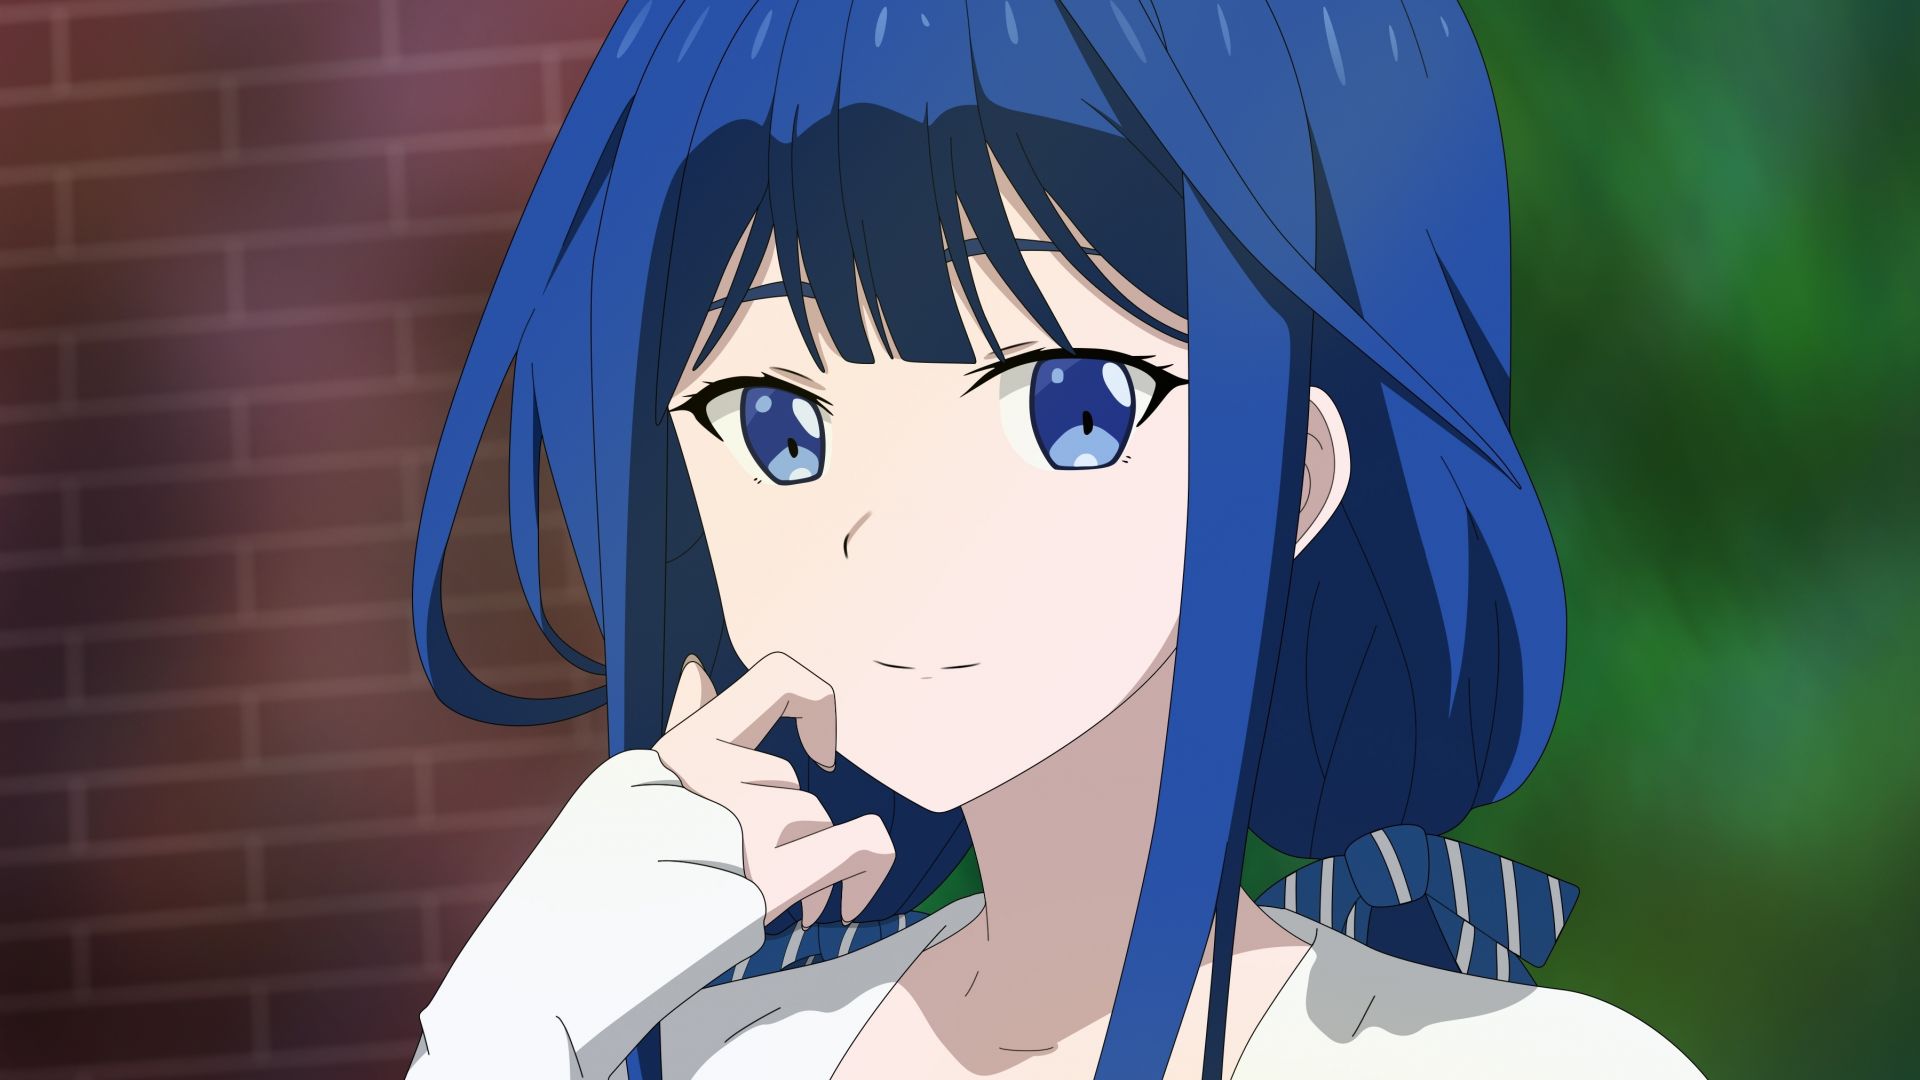 Aki adagaki, cute, anime girl, blue hair wallpaper, HD image, picture, background, 53eb9b